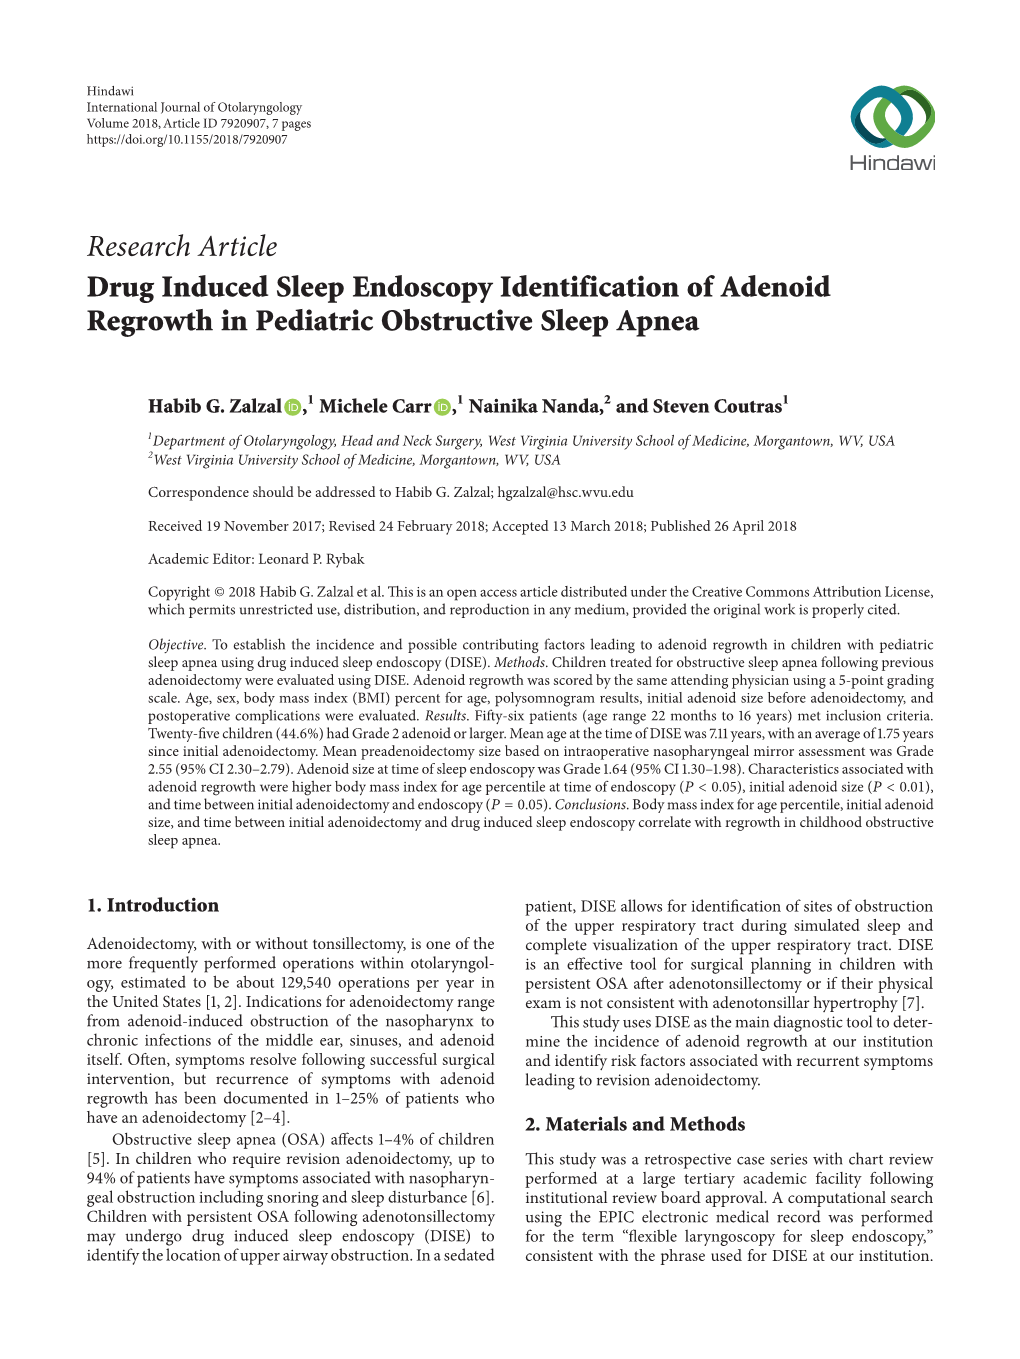 Drug Induced Sleep Endoscopy Identification of Adenoid Regrowth in Pediatric Obstructive Sleep Apnea